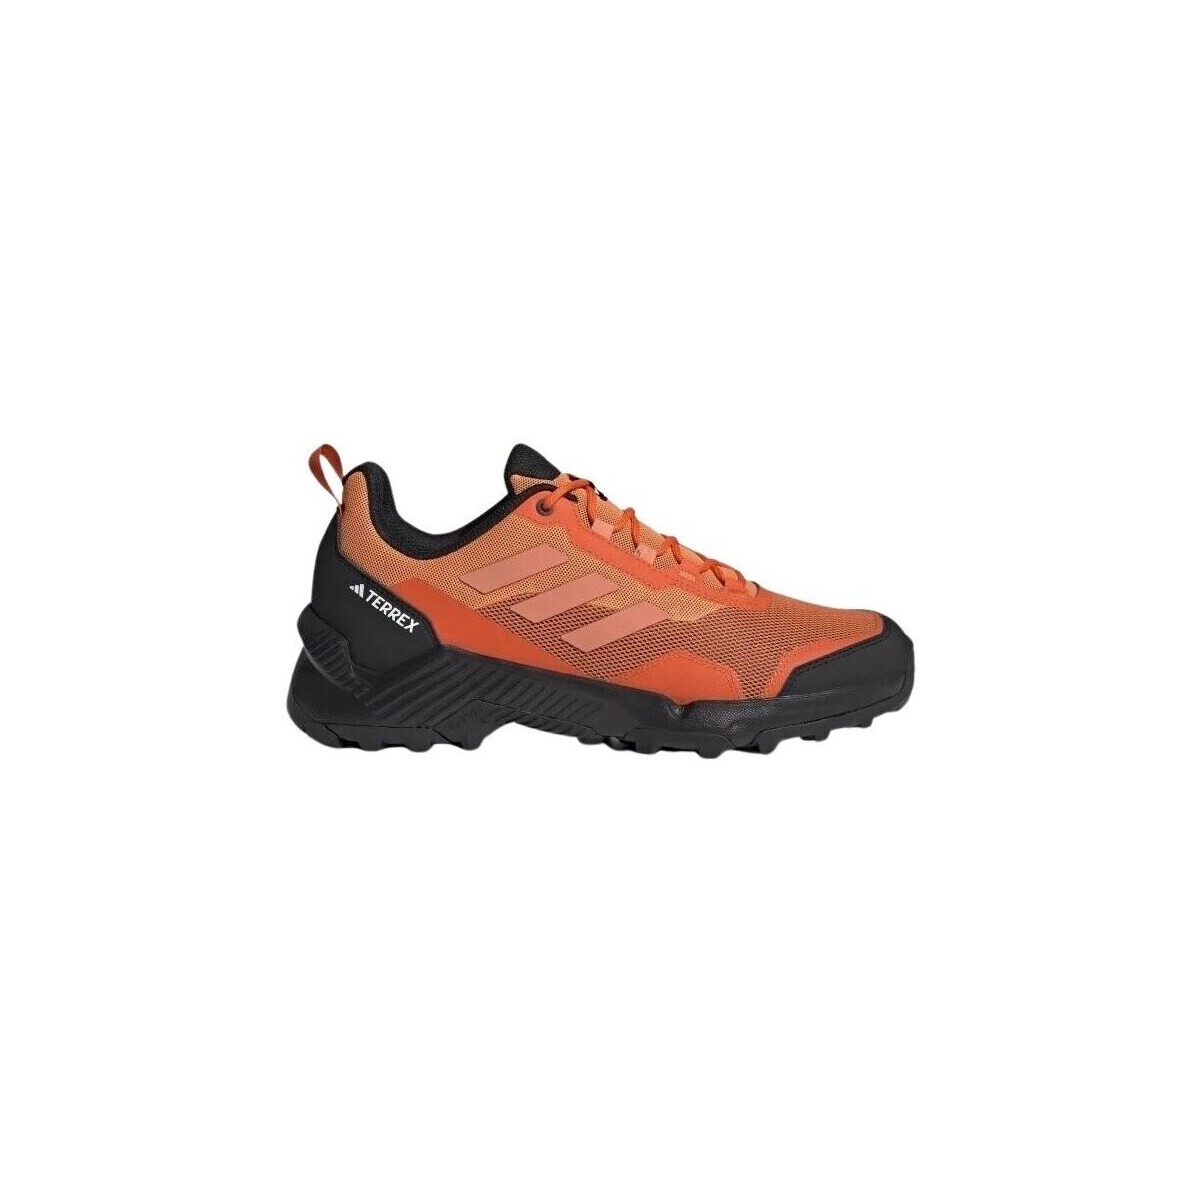 Chaussures Homme Randonnée adidas Originals Eastrail 20 Hiking Orange